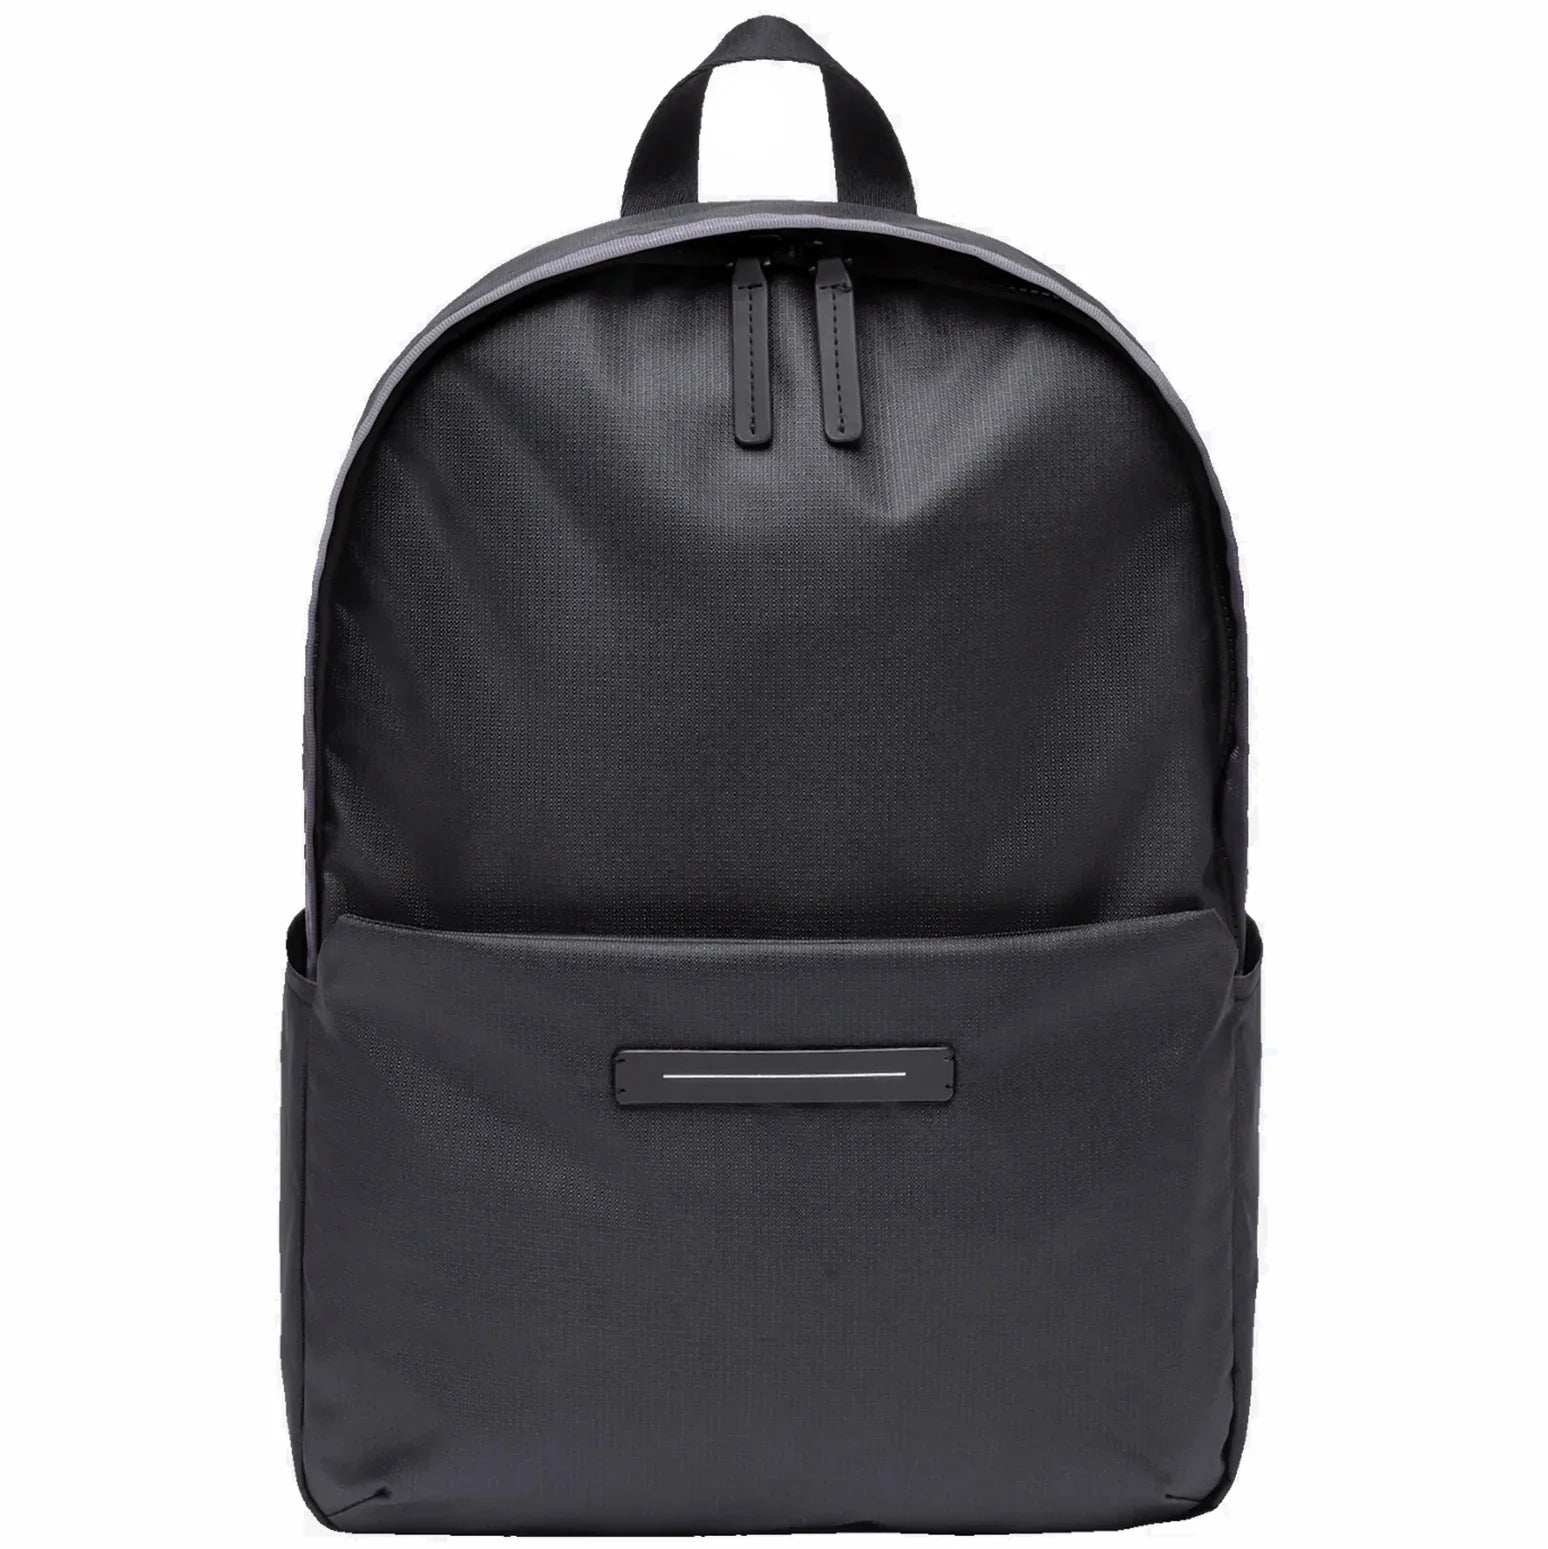 Horizn Studios Shibuya daypack backpack 44 cm - black/grey lavender